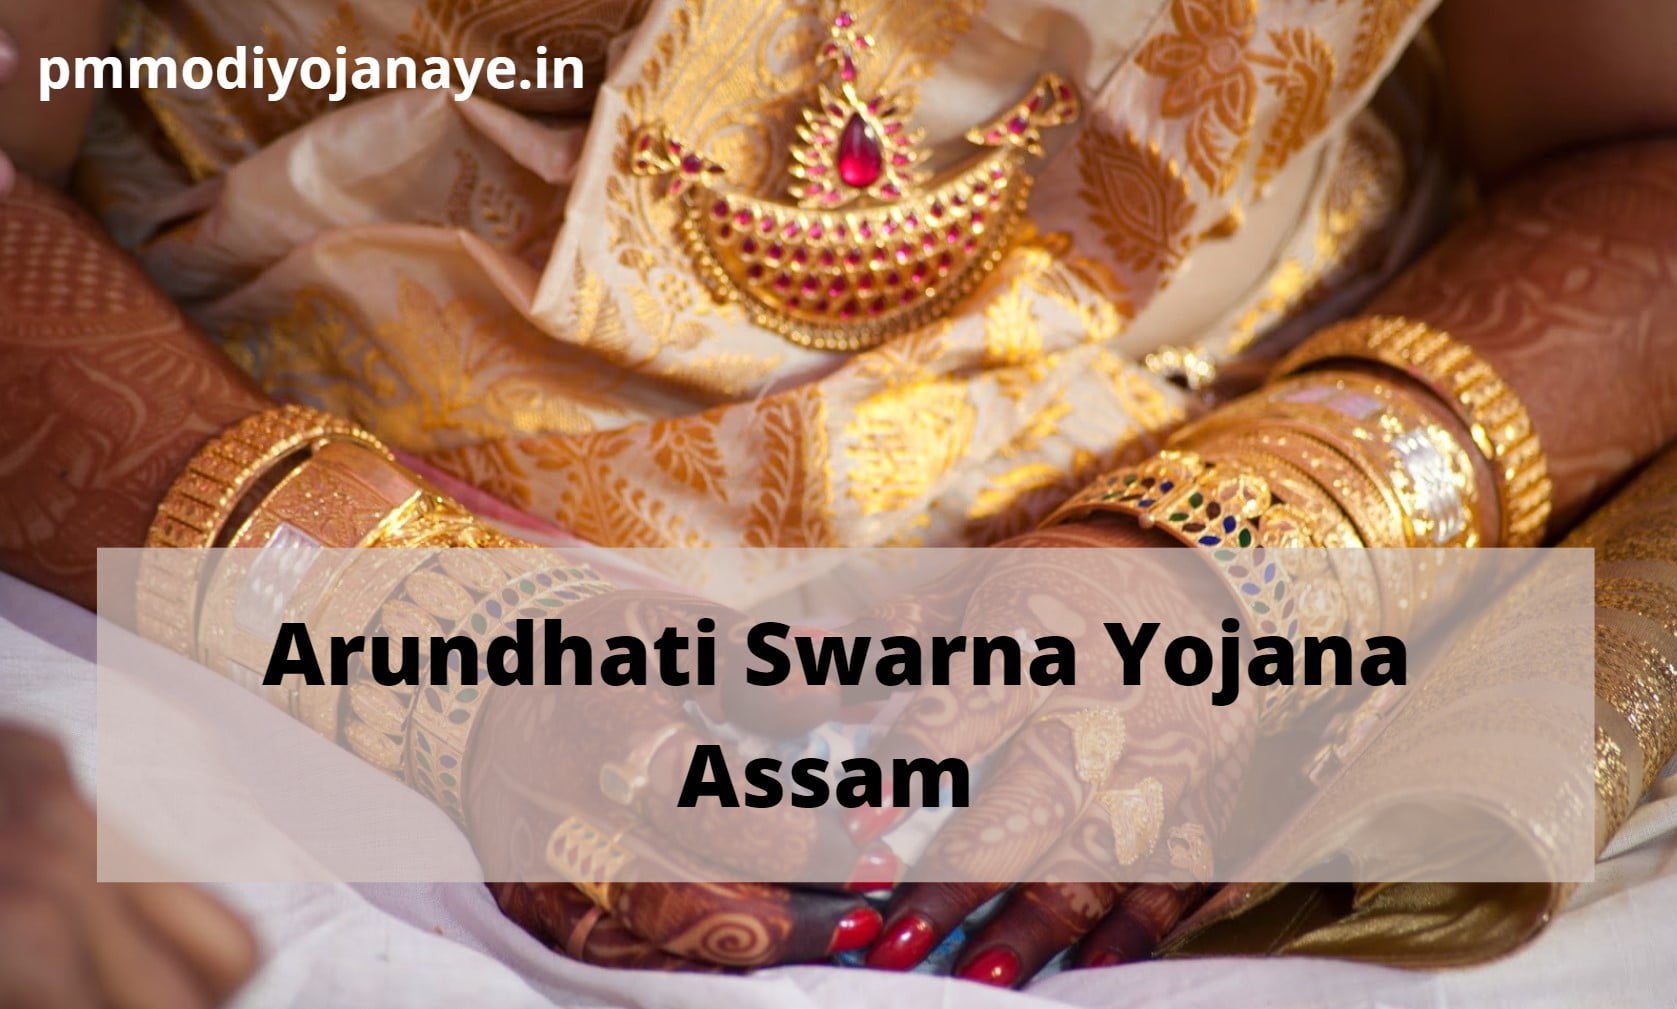 Assam-arundhati-swarna-yojana